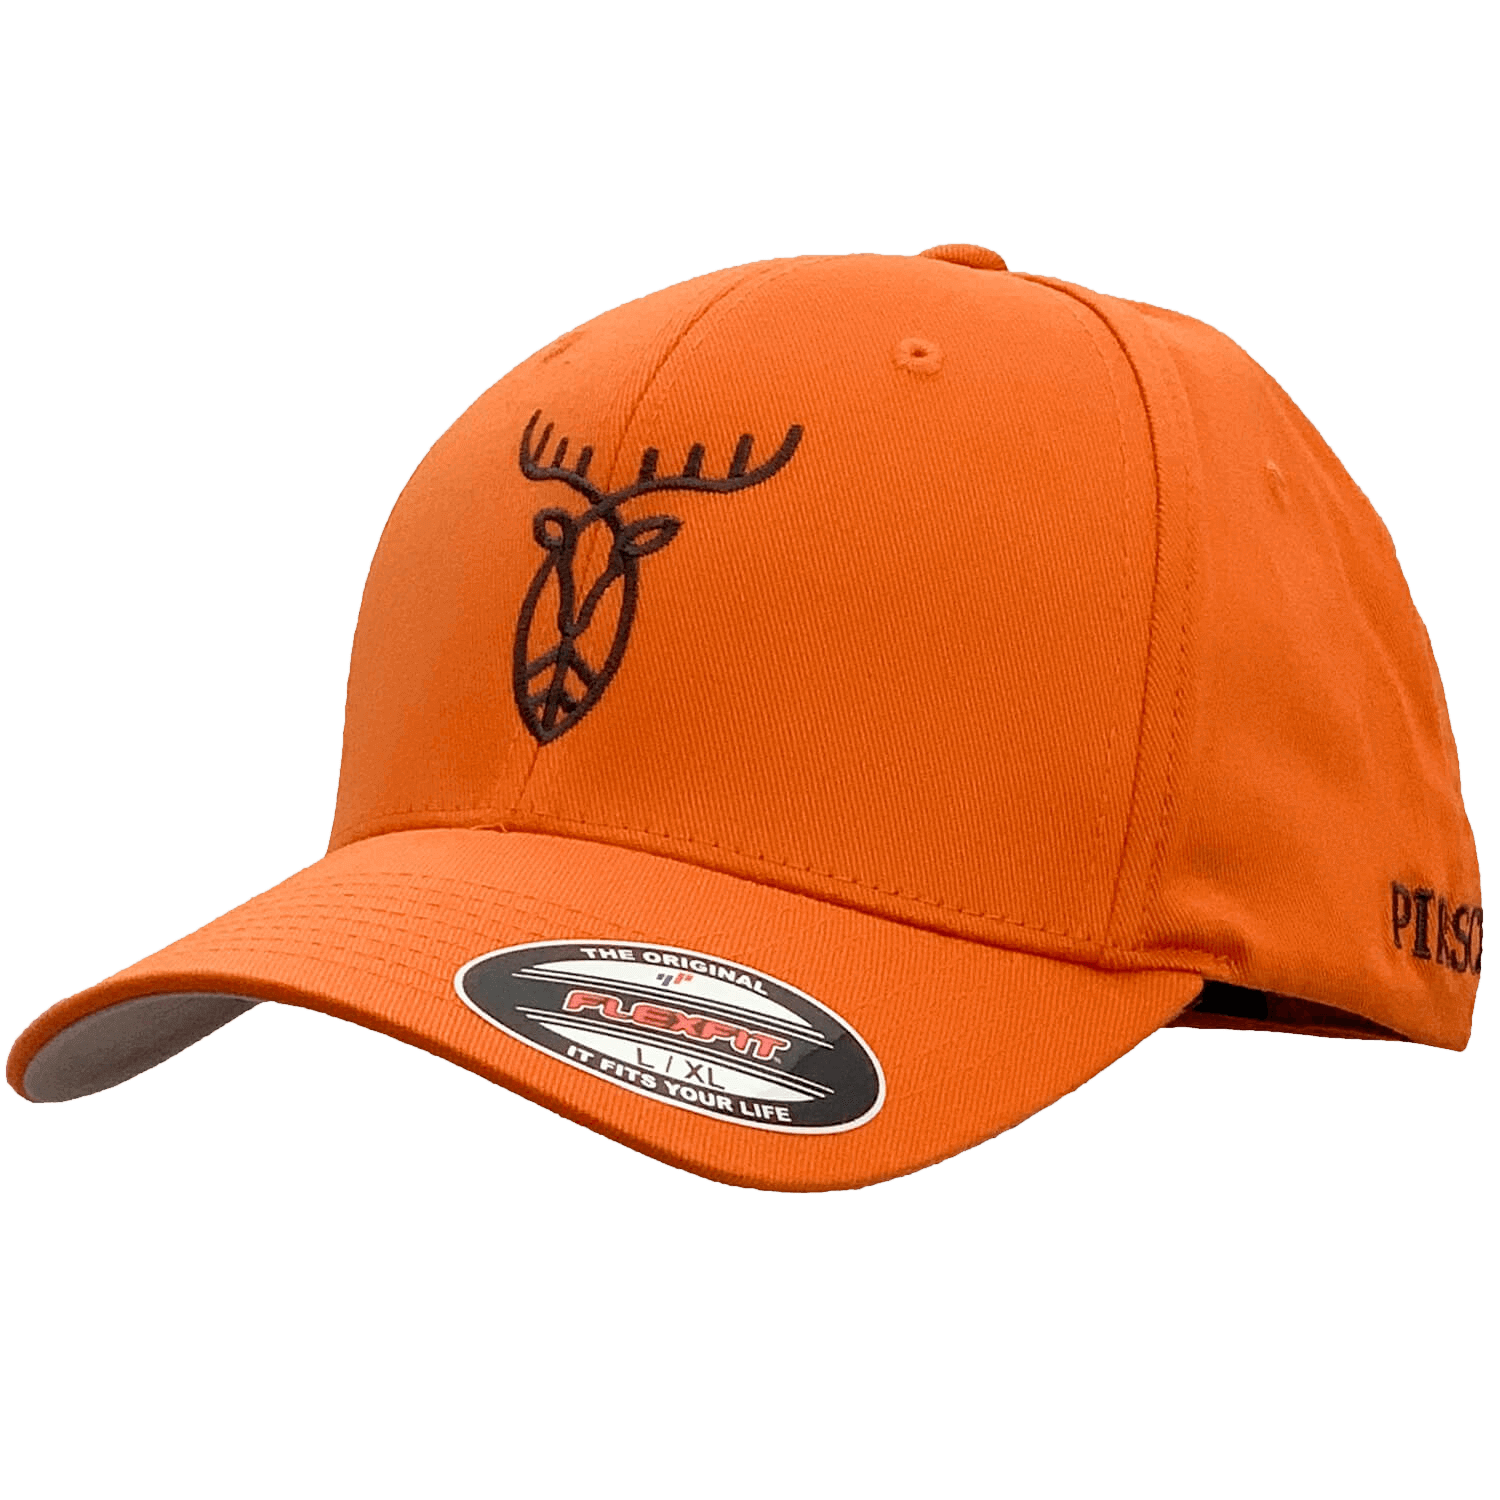 Pirscher Gear Cap Logo (Orange) - Mützen & Caps